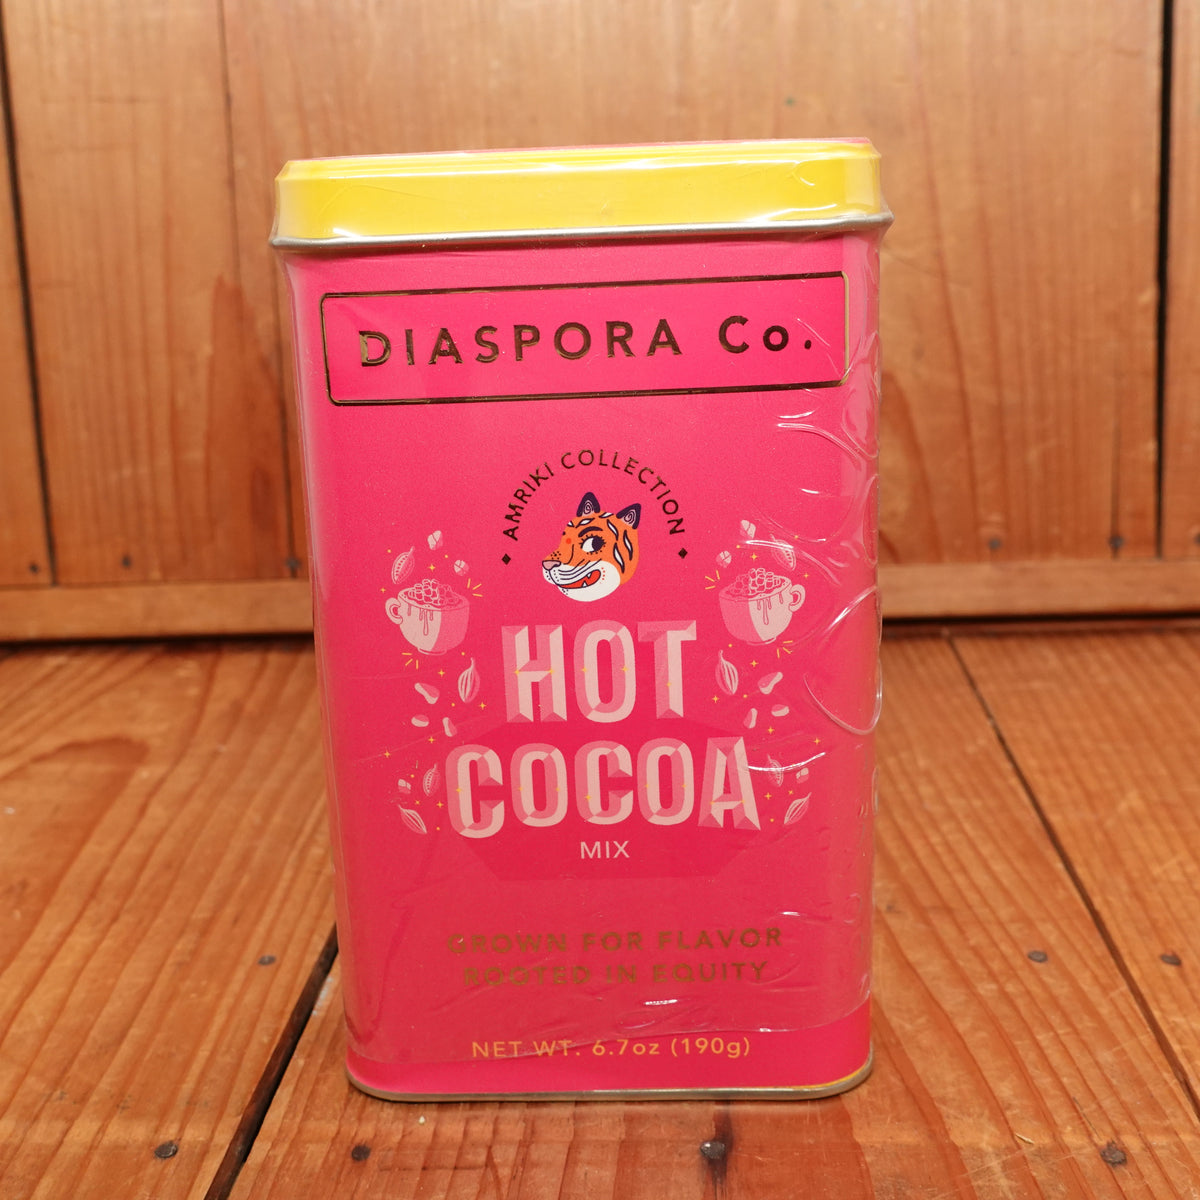 Diaspora Co. House-Blend Hot Cocoa Mix - 190g